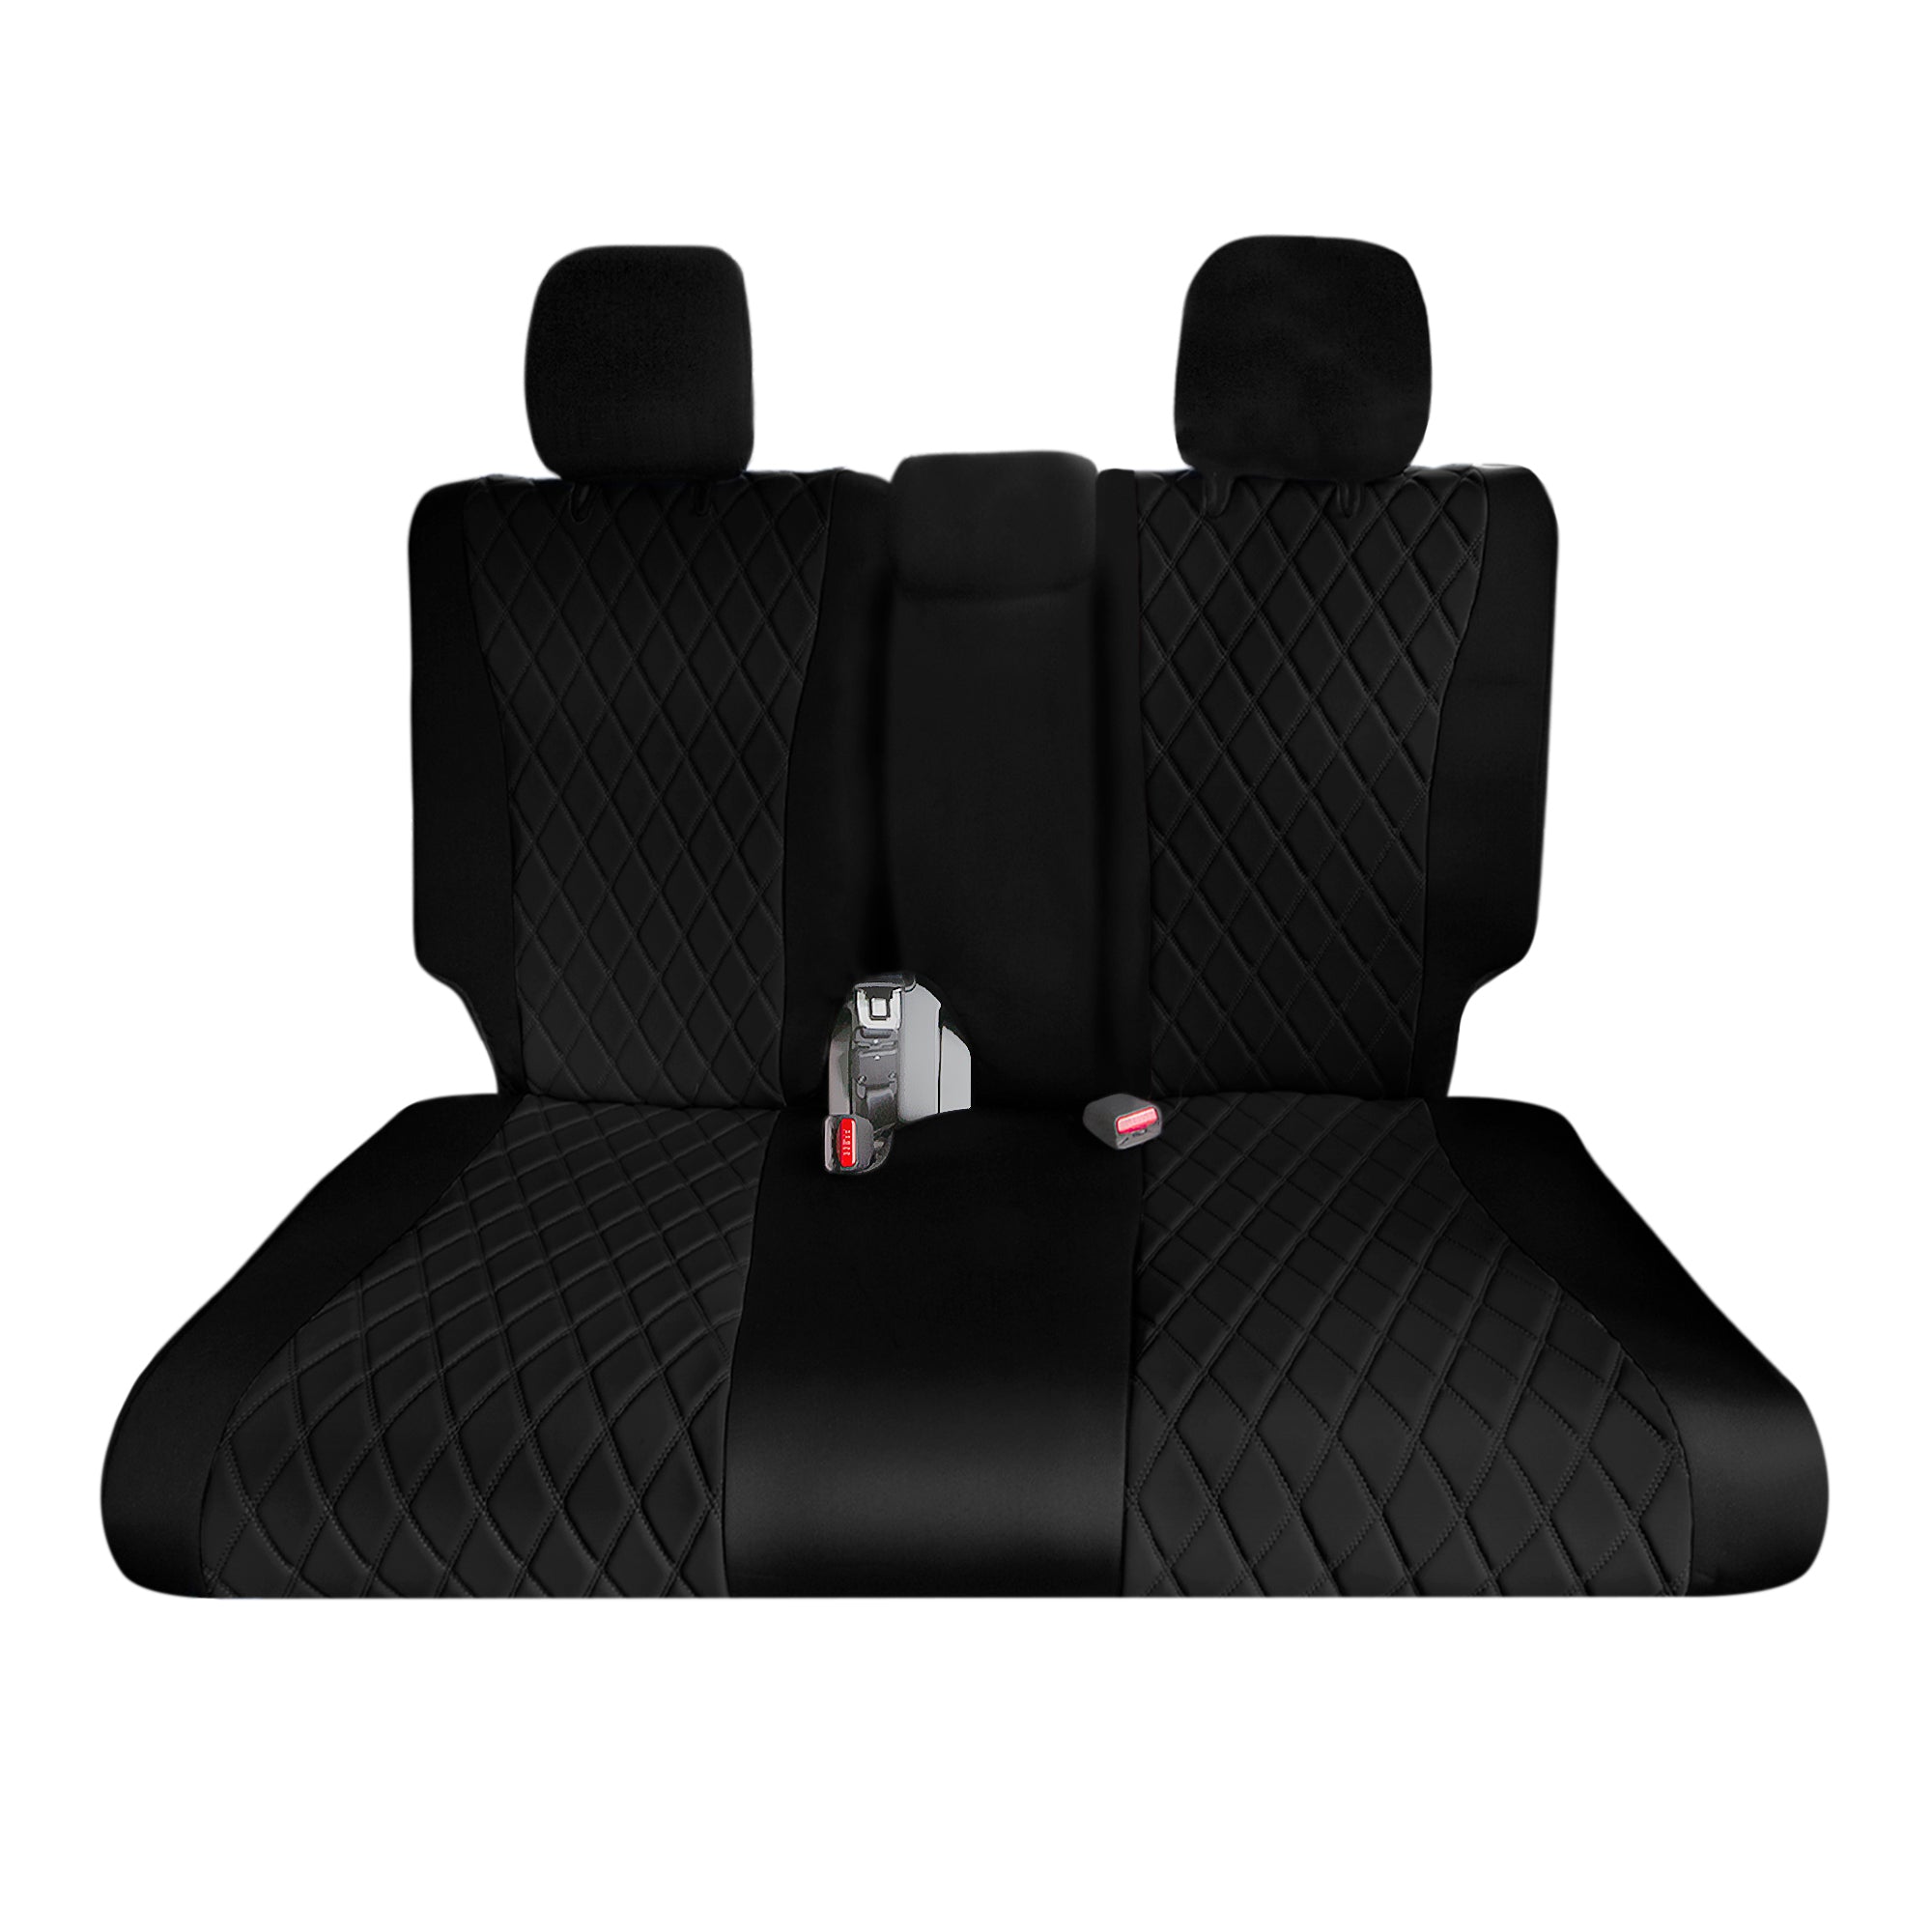 Honda Pilot 2016 - 2022 - 3rd Row Seat Covers - Black Ultraflex Neoprene